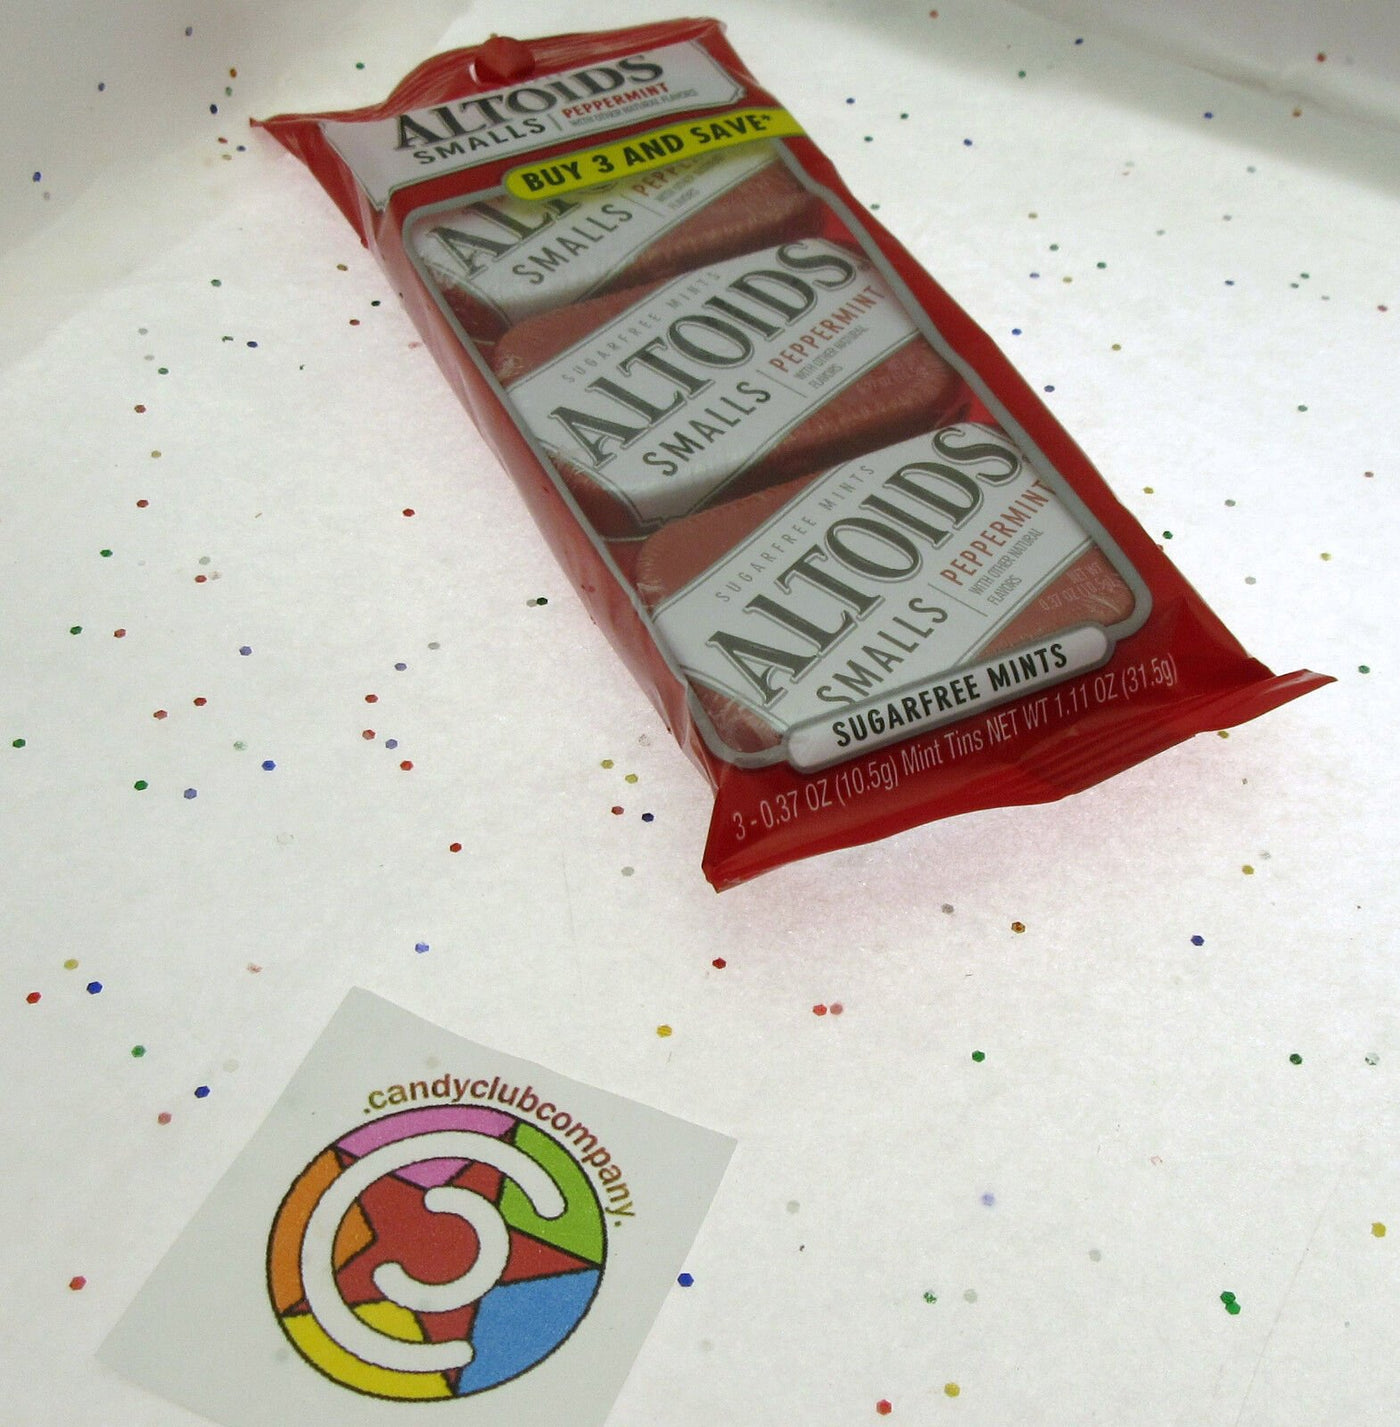 Altoids Smalls Peppermint ~ Sugar Free Mints ~ Candy 3 - 0.37oz Packs